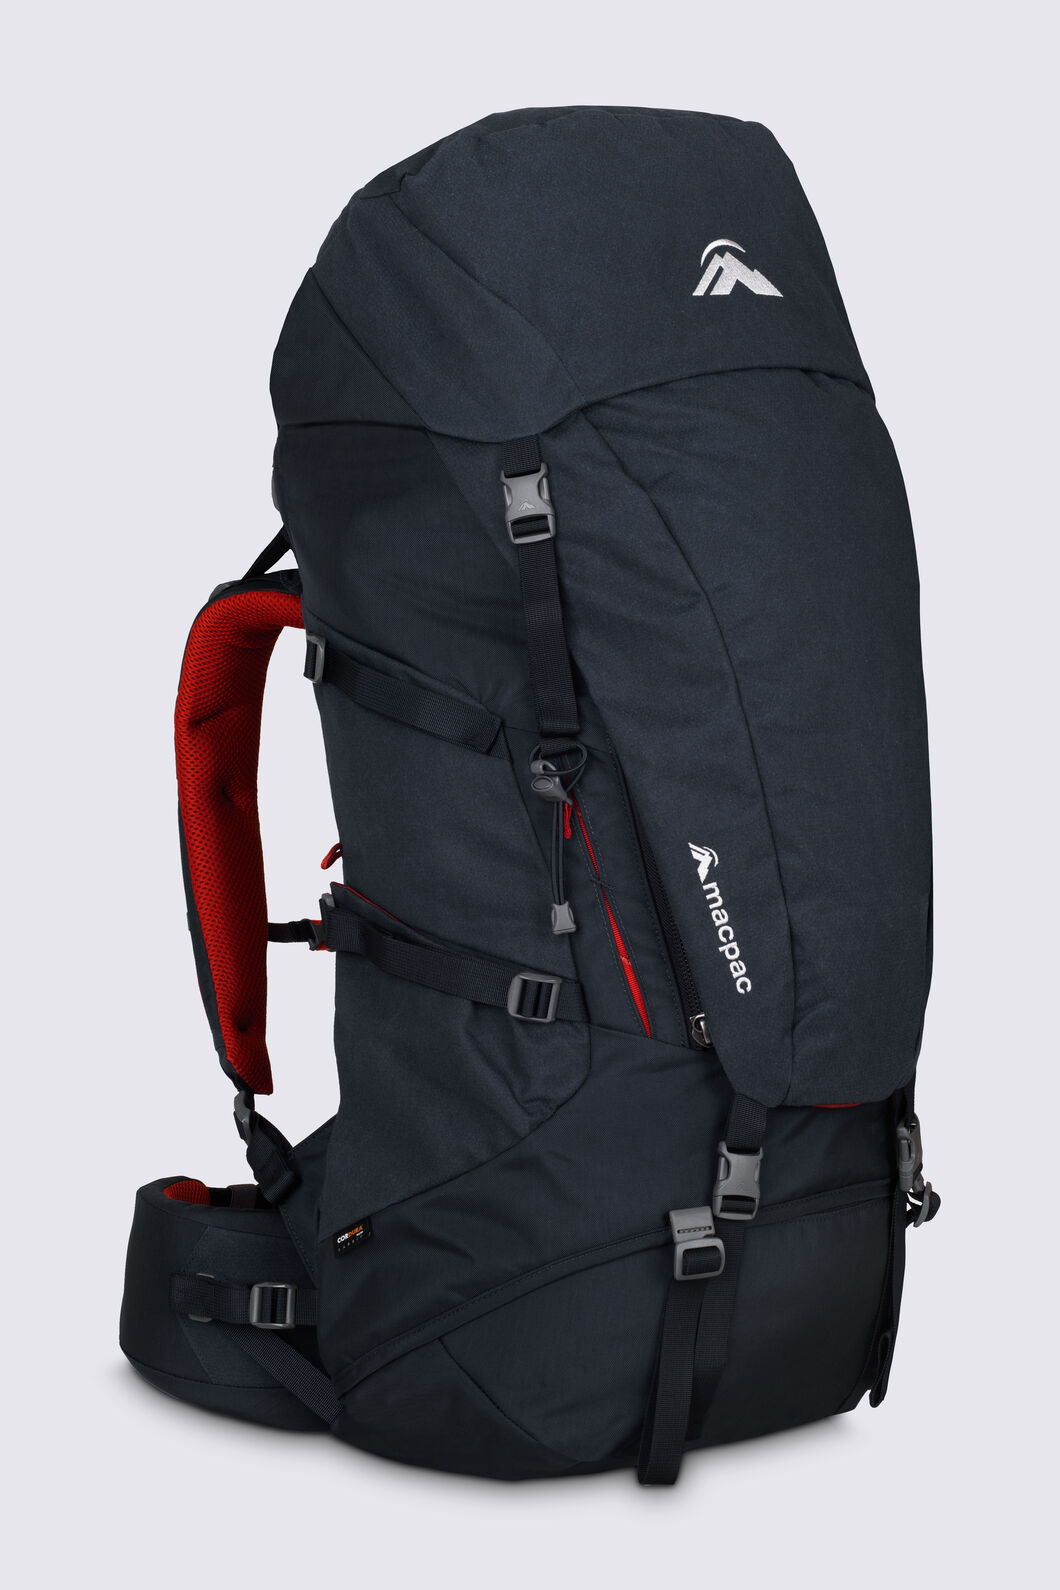 Macpac Torlesse AzTec® Front Zip 65L Hiking Backpack, Carbon, hi-res